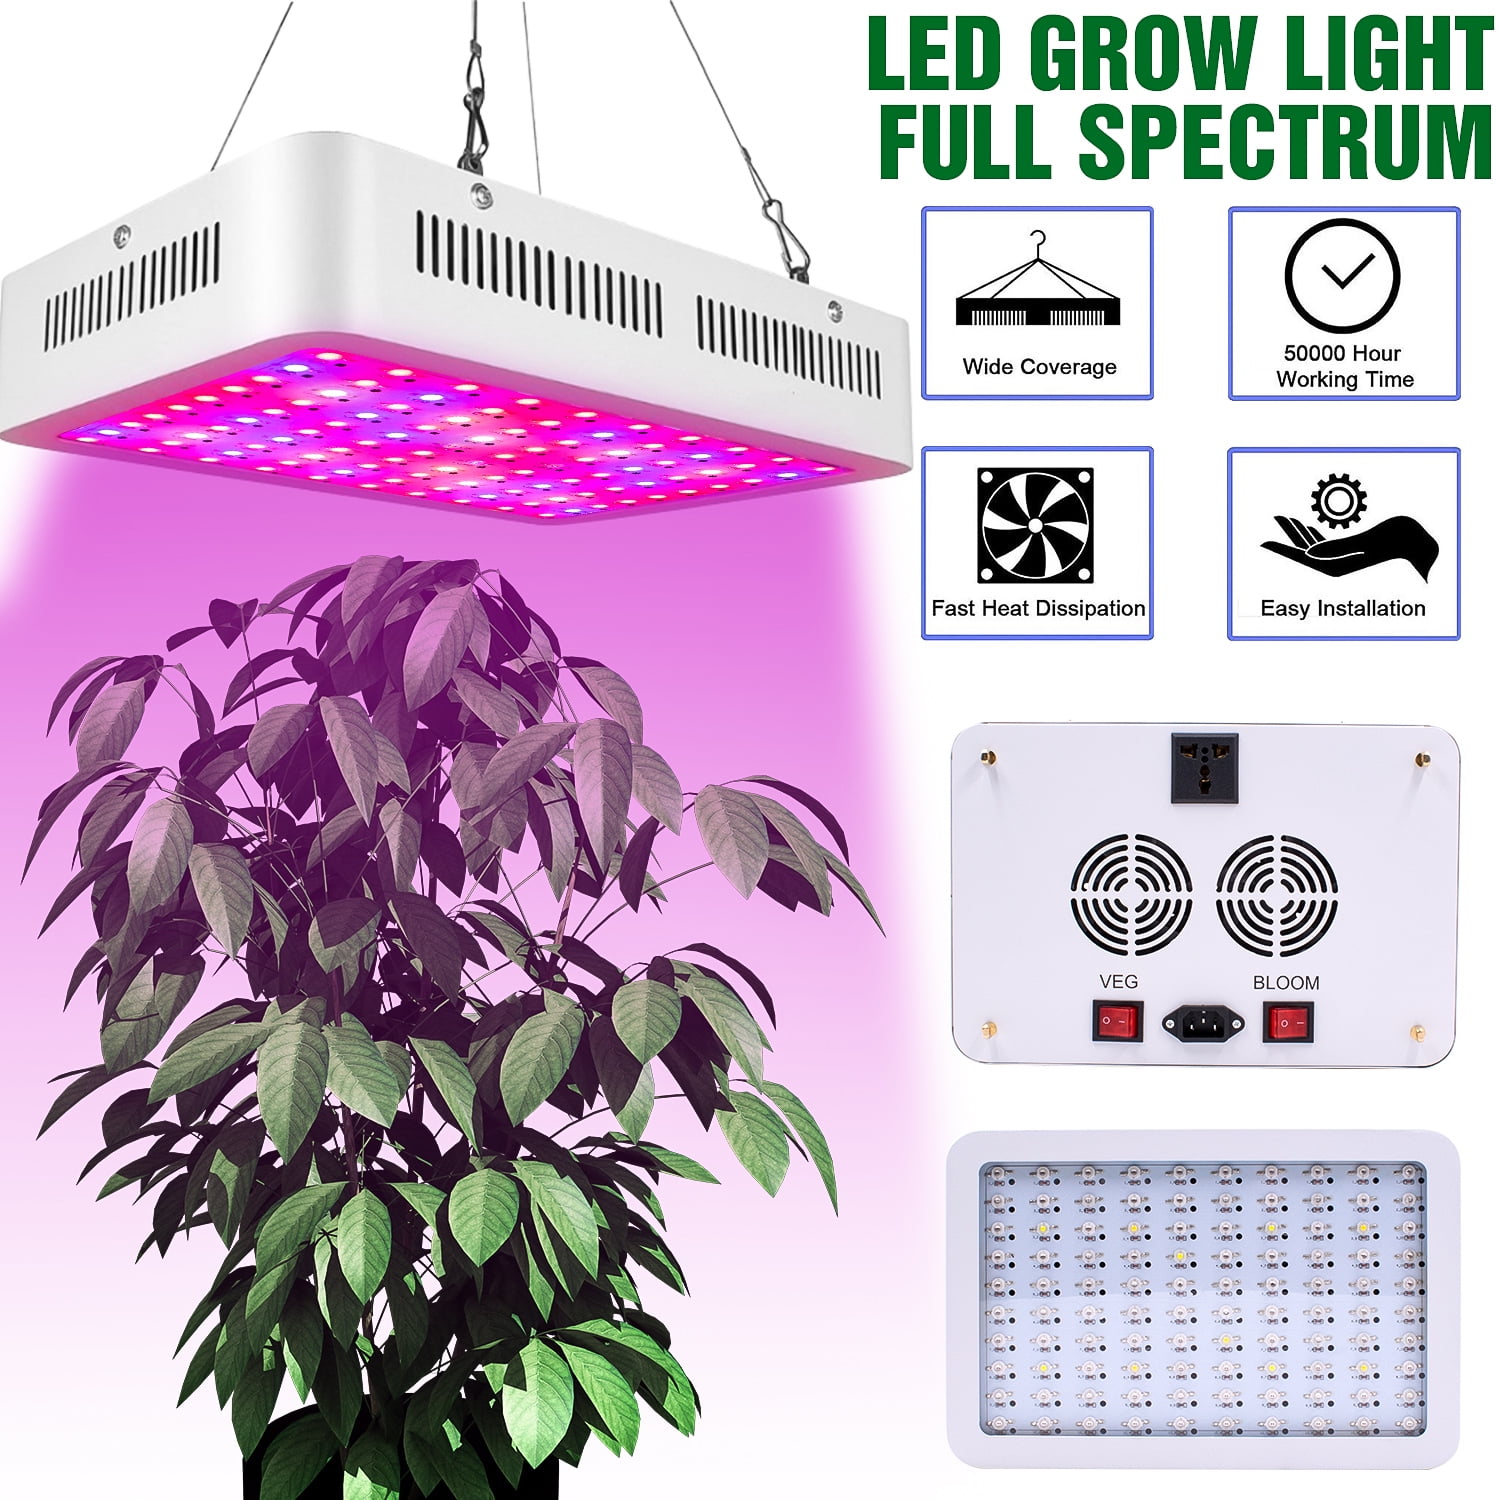 600watt Grow Light Full Spectrum LED Grow Light Panel For Hydroponic Grow System 